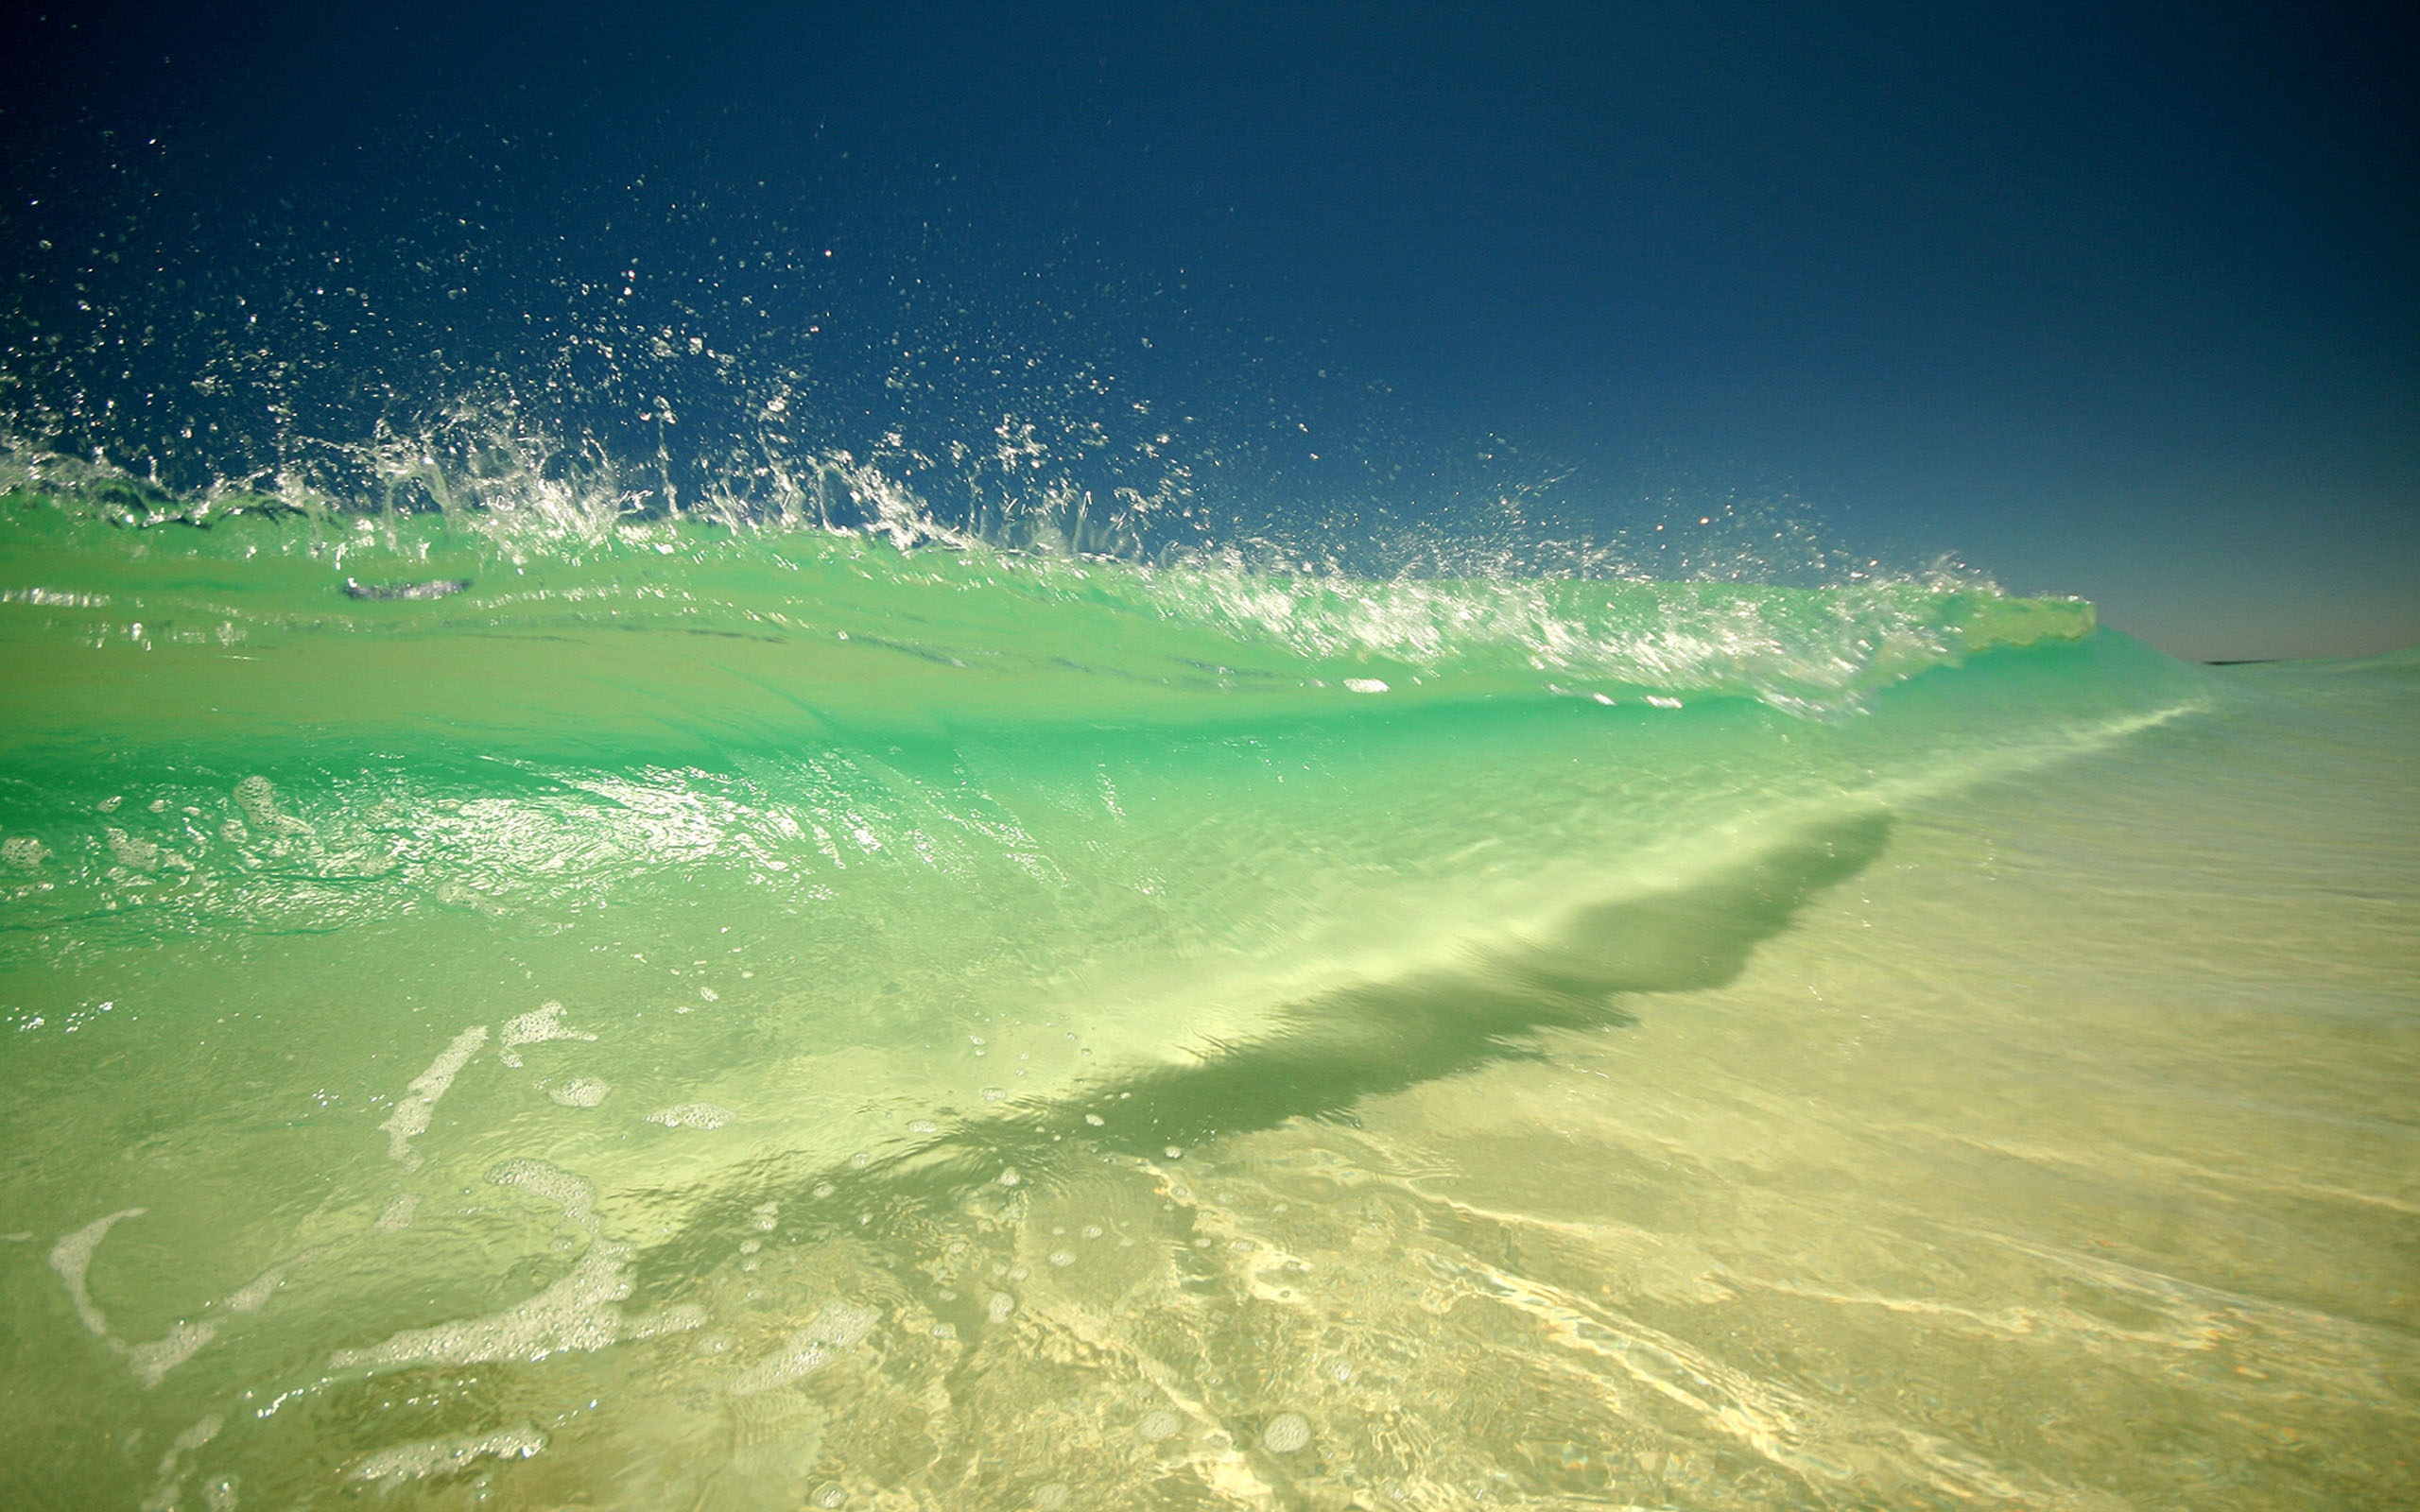 Обои на стол волна. Природа море. Море, волны. Зеленое море. Заставка на рабочий стол море.